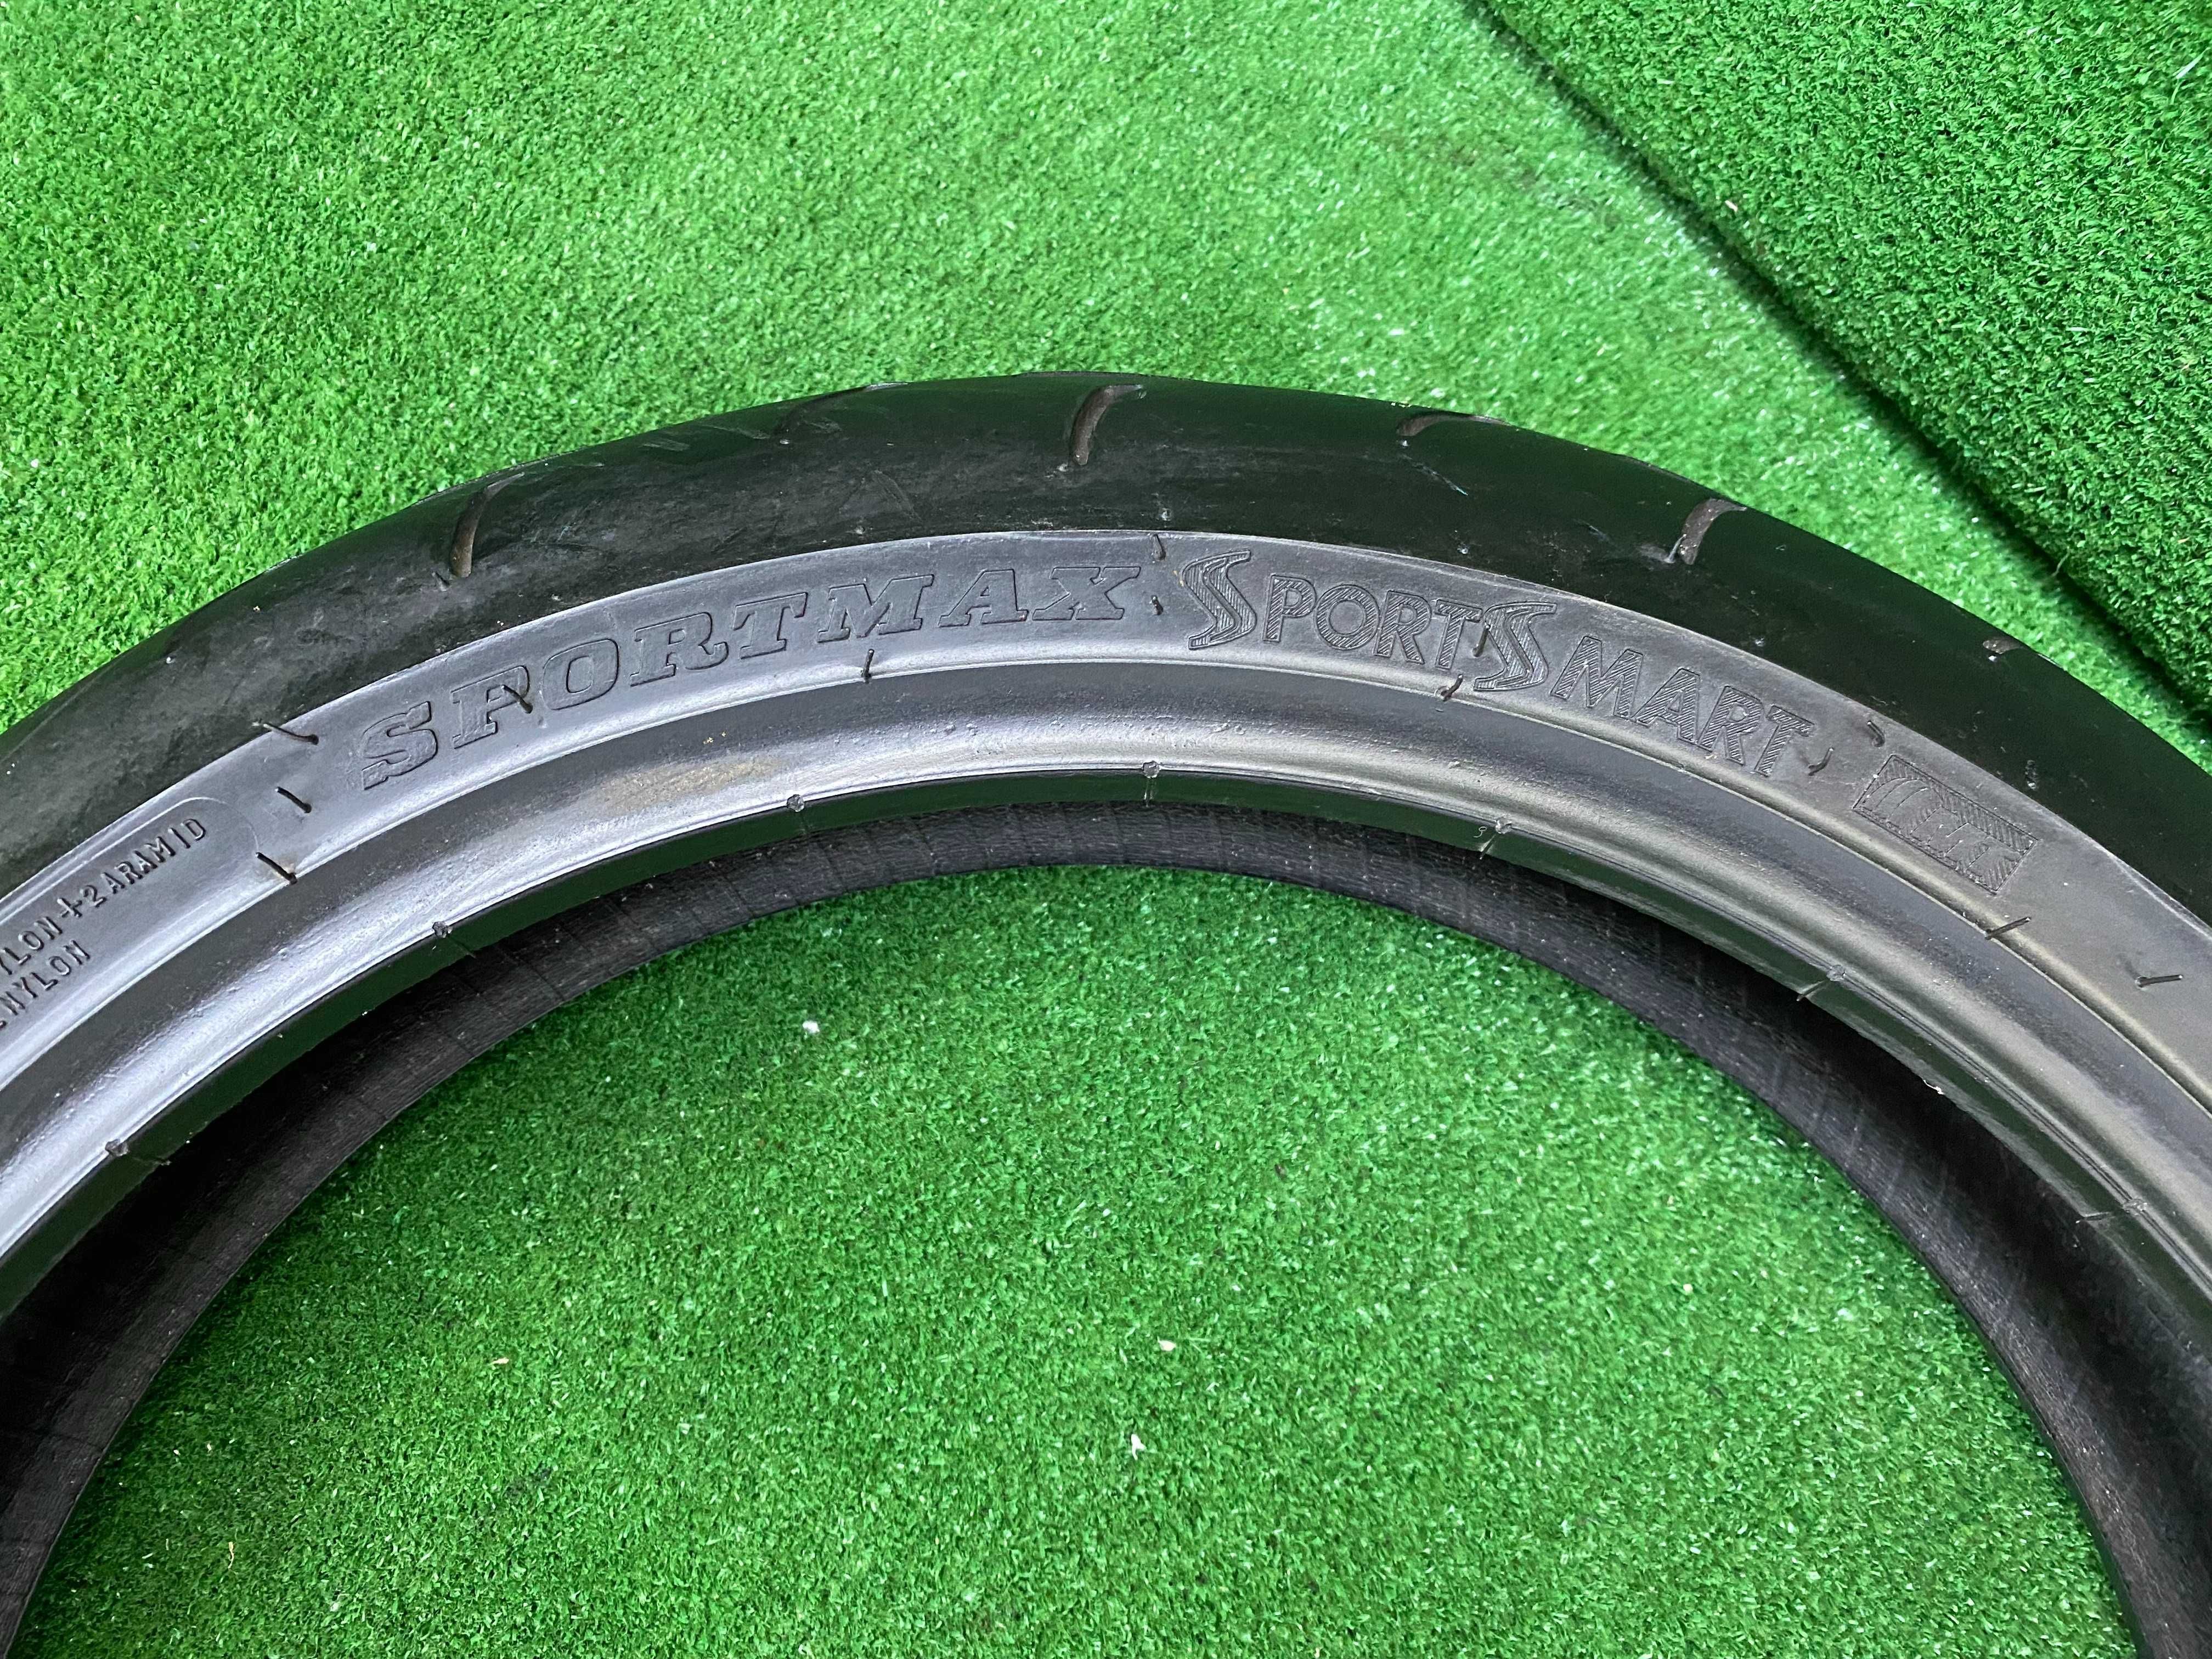 120/70/17 dunlop sportmax sportsmart pneu usados